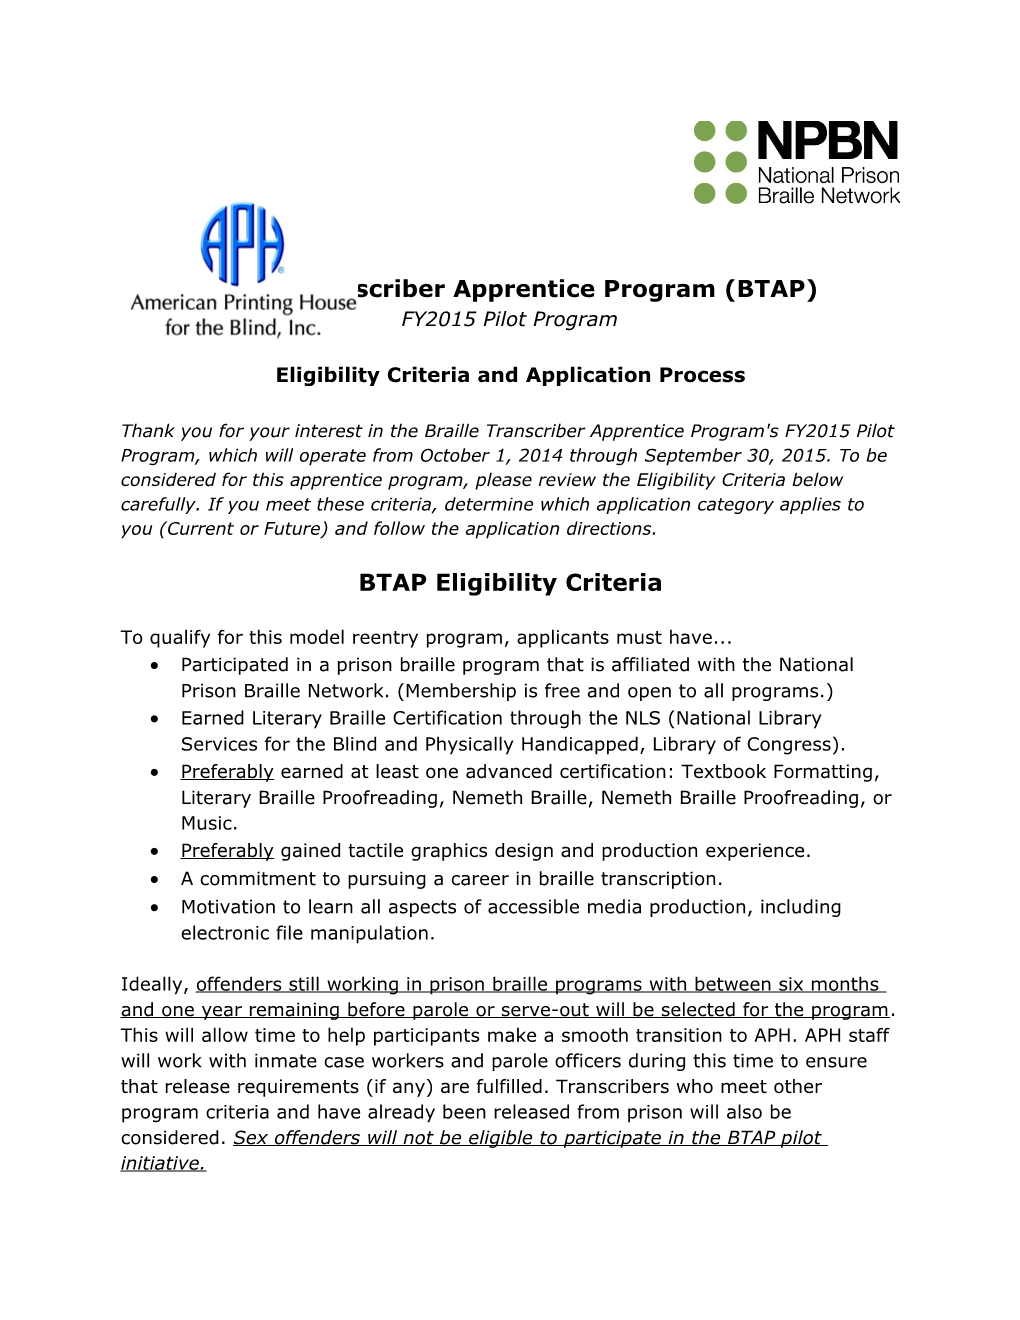 Braille Transcriber Apprentice Program (BTAP)